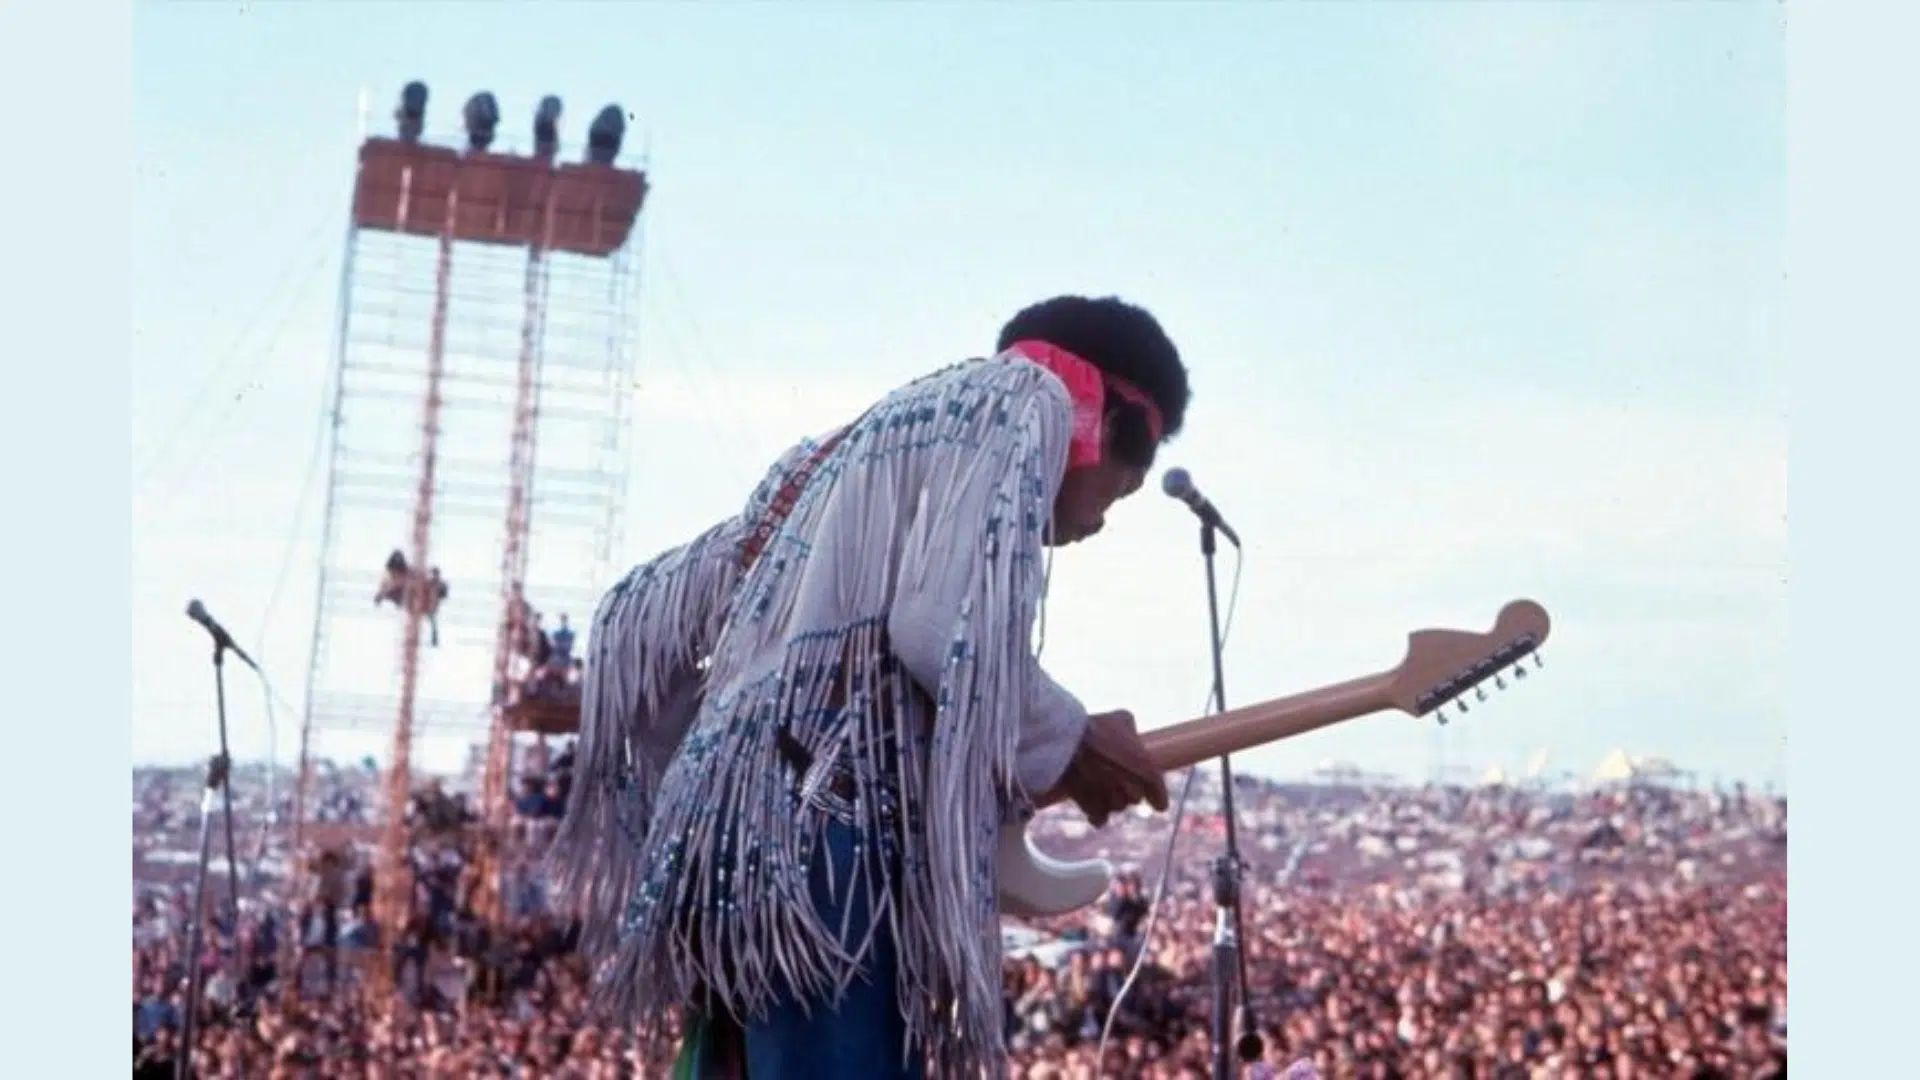 Woodstock World Brings The Iconic 1969 Fesztivál Into The Metaverse